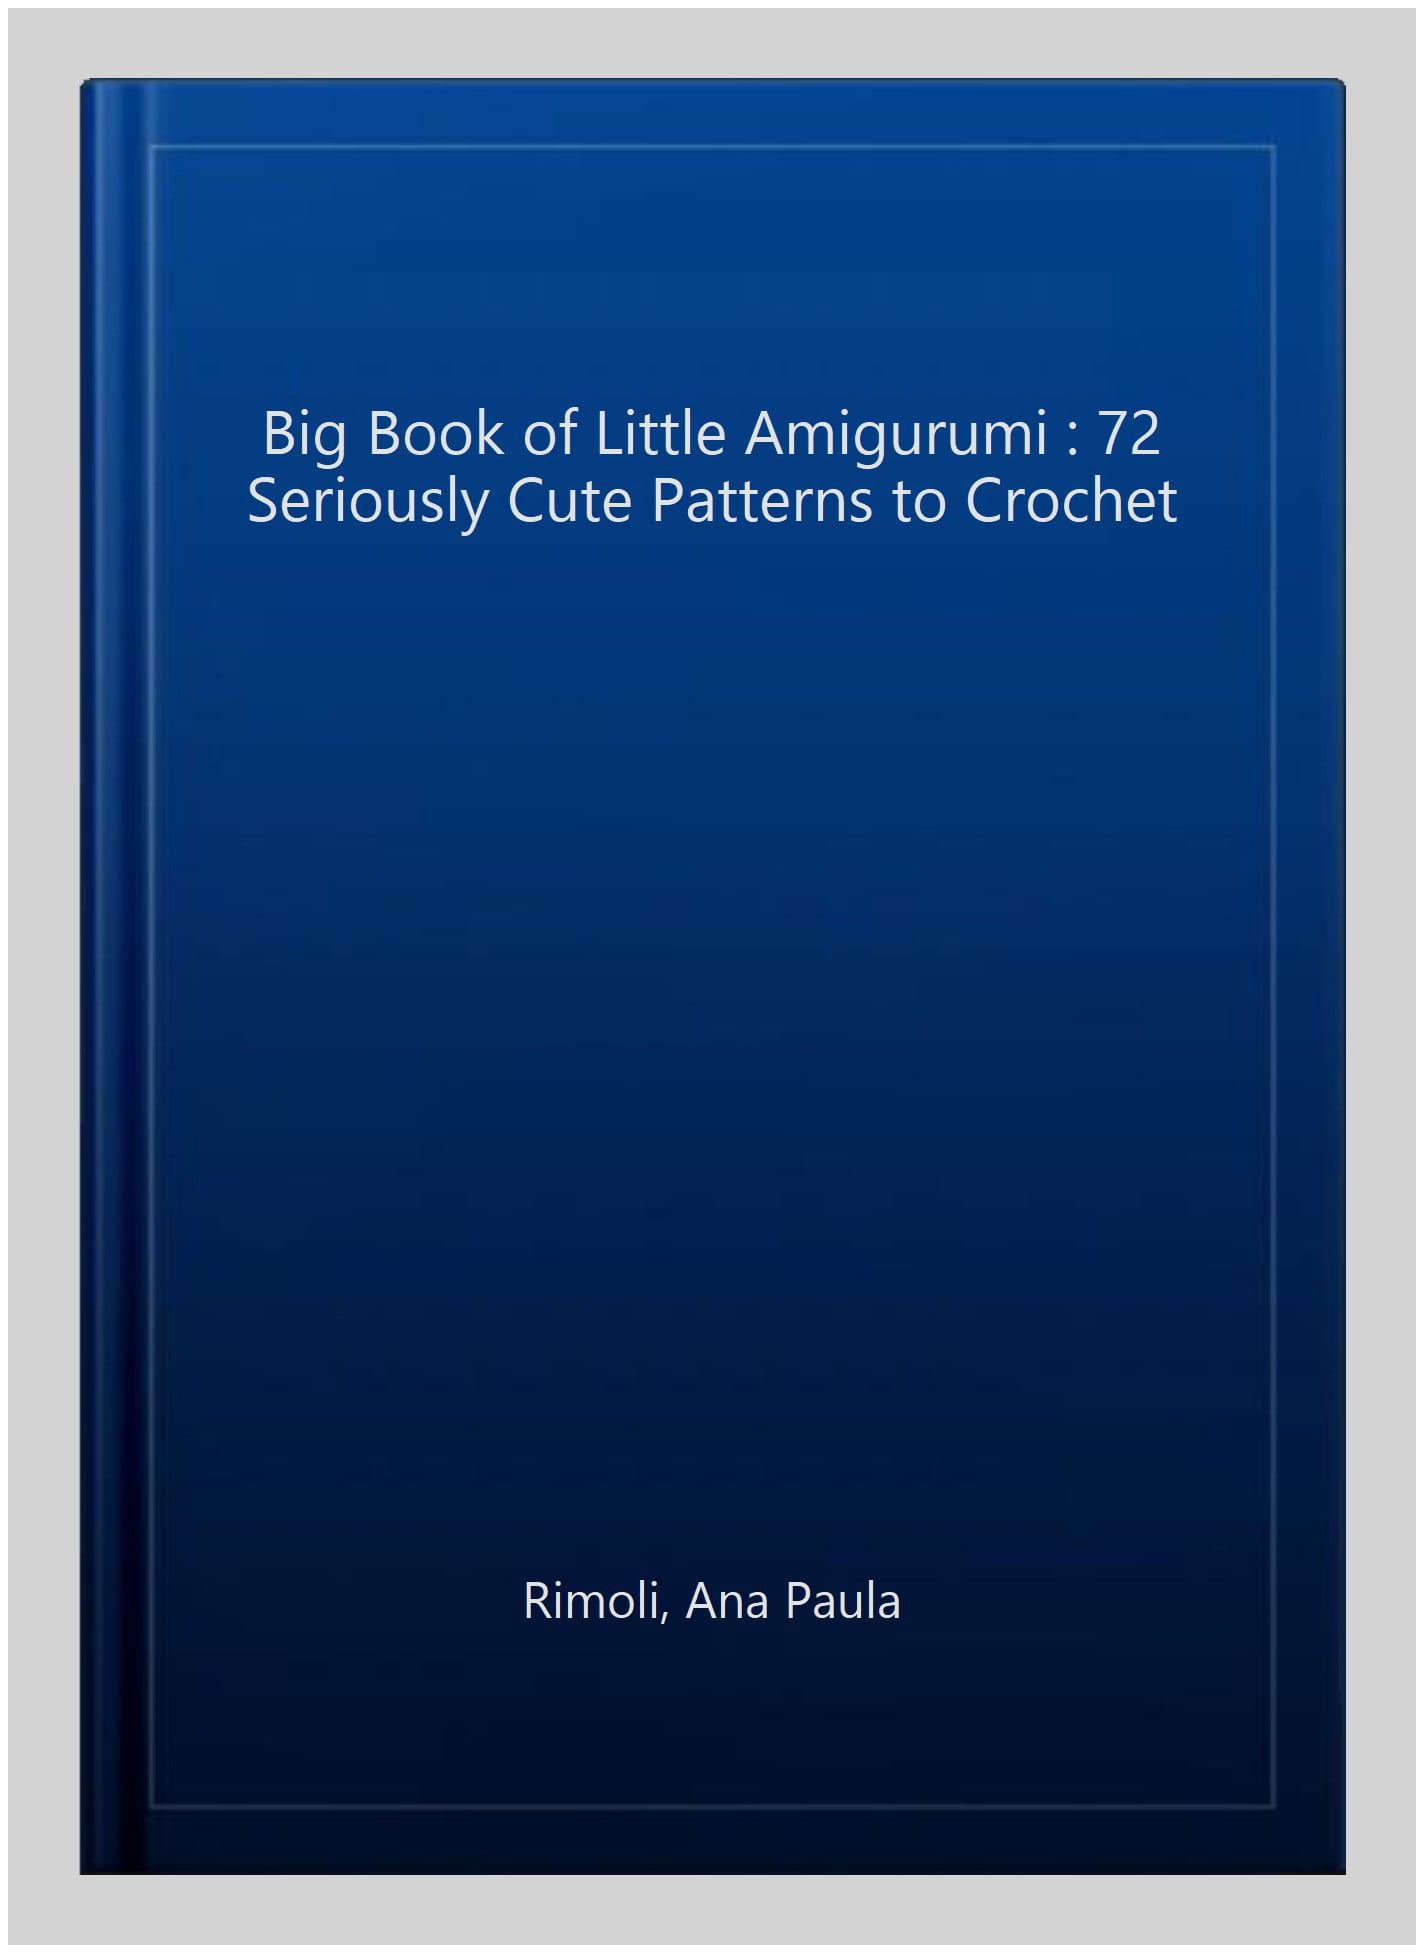 The big book of little amigurumi : : 72 seriously cute